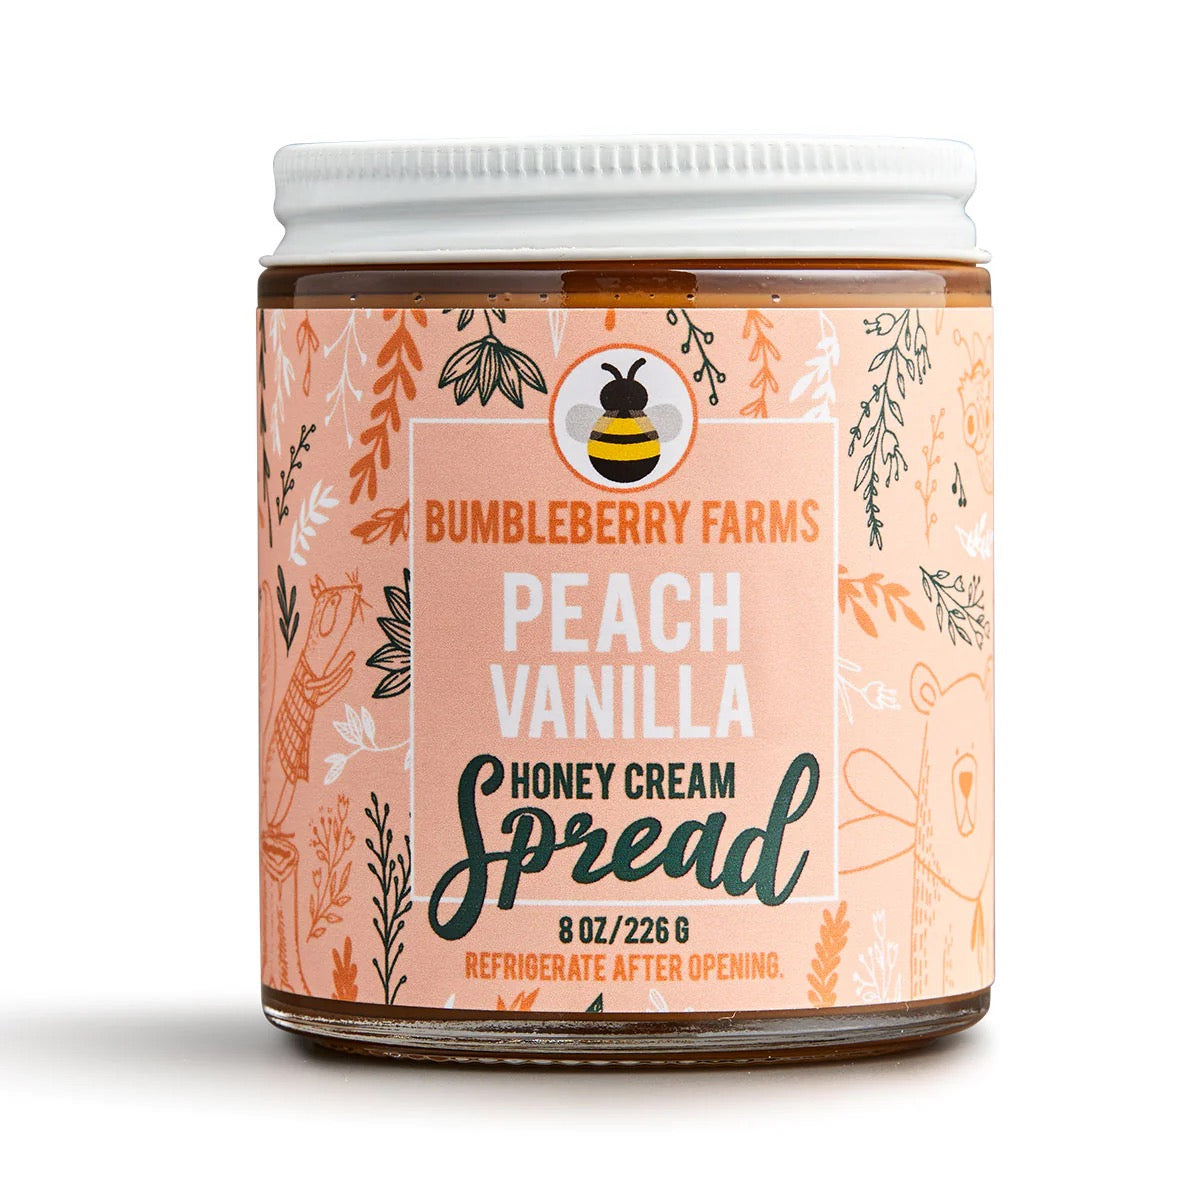 Peach Vanilla Honey Cream Spread 8 oz